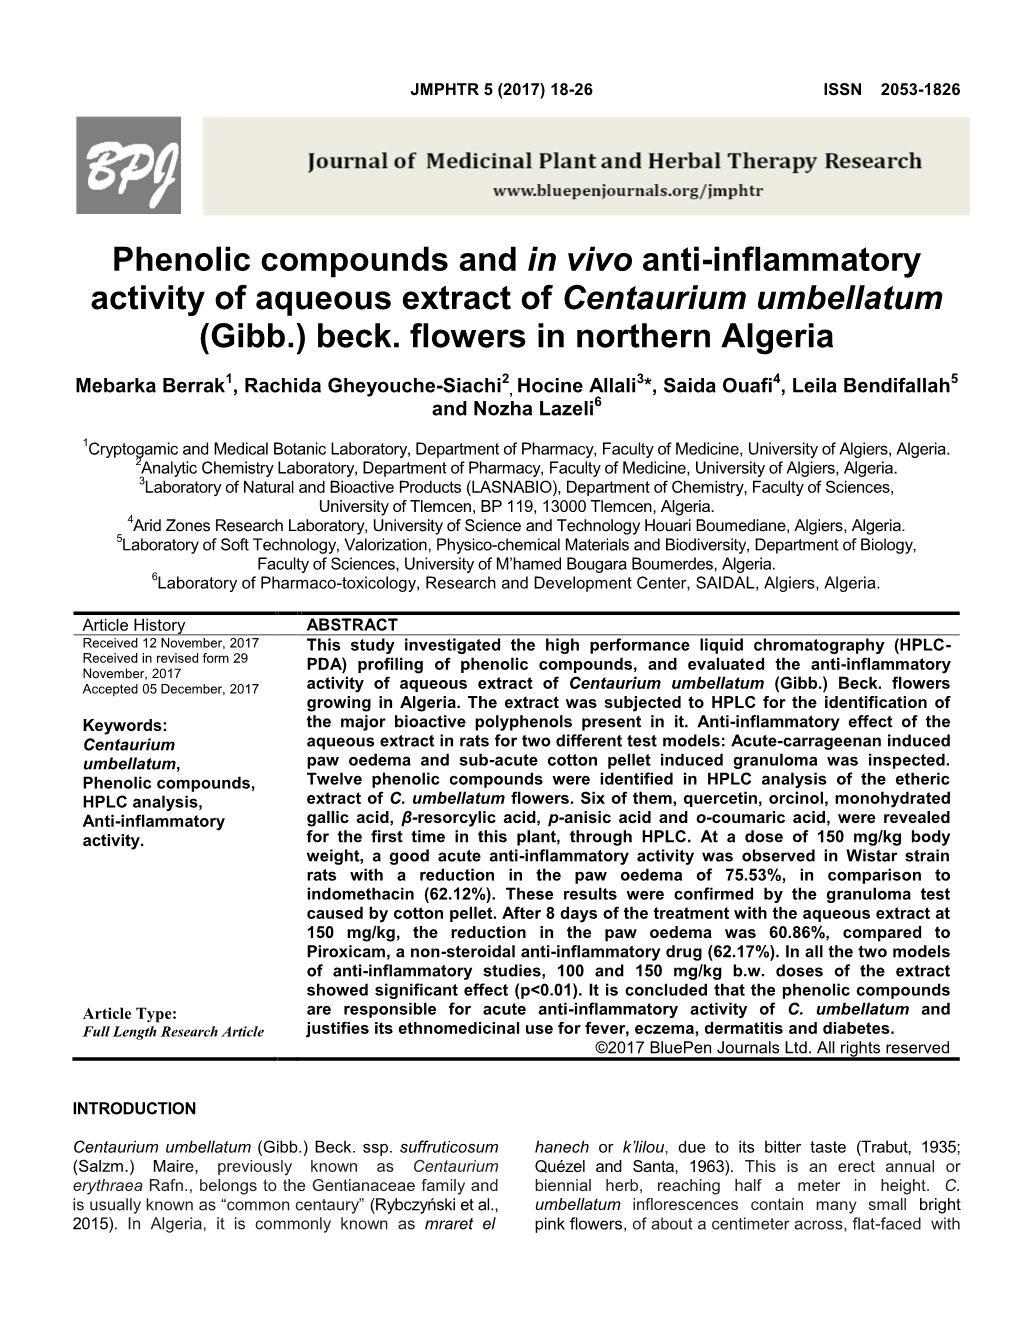 Phenolic Compounds and in Vivo Anti-Inflammatory Activity of Aqueous Extract of Centaurium Umbellatum (Gibb.) Beck